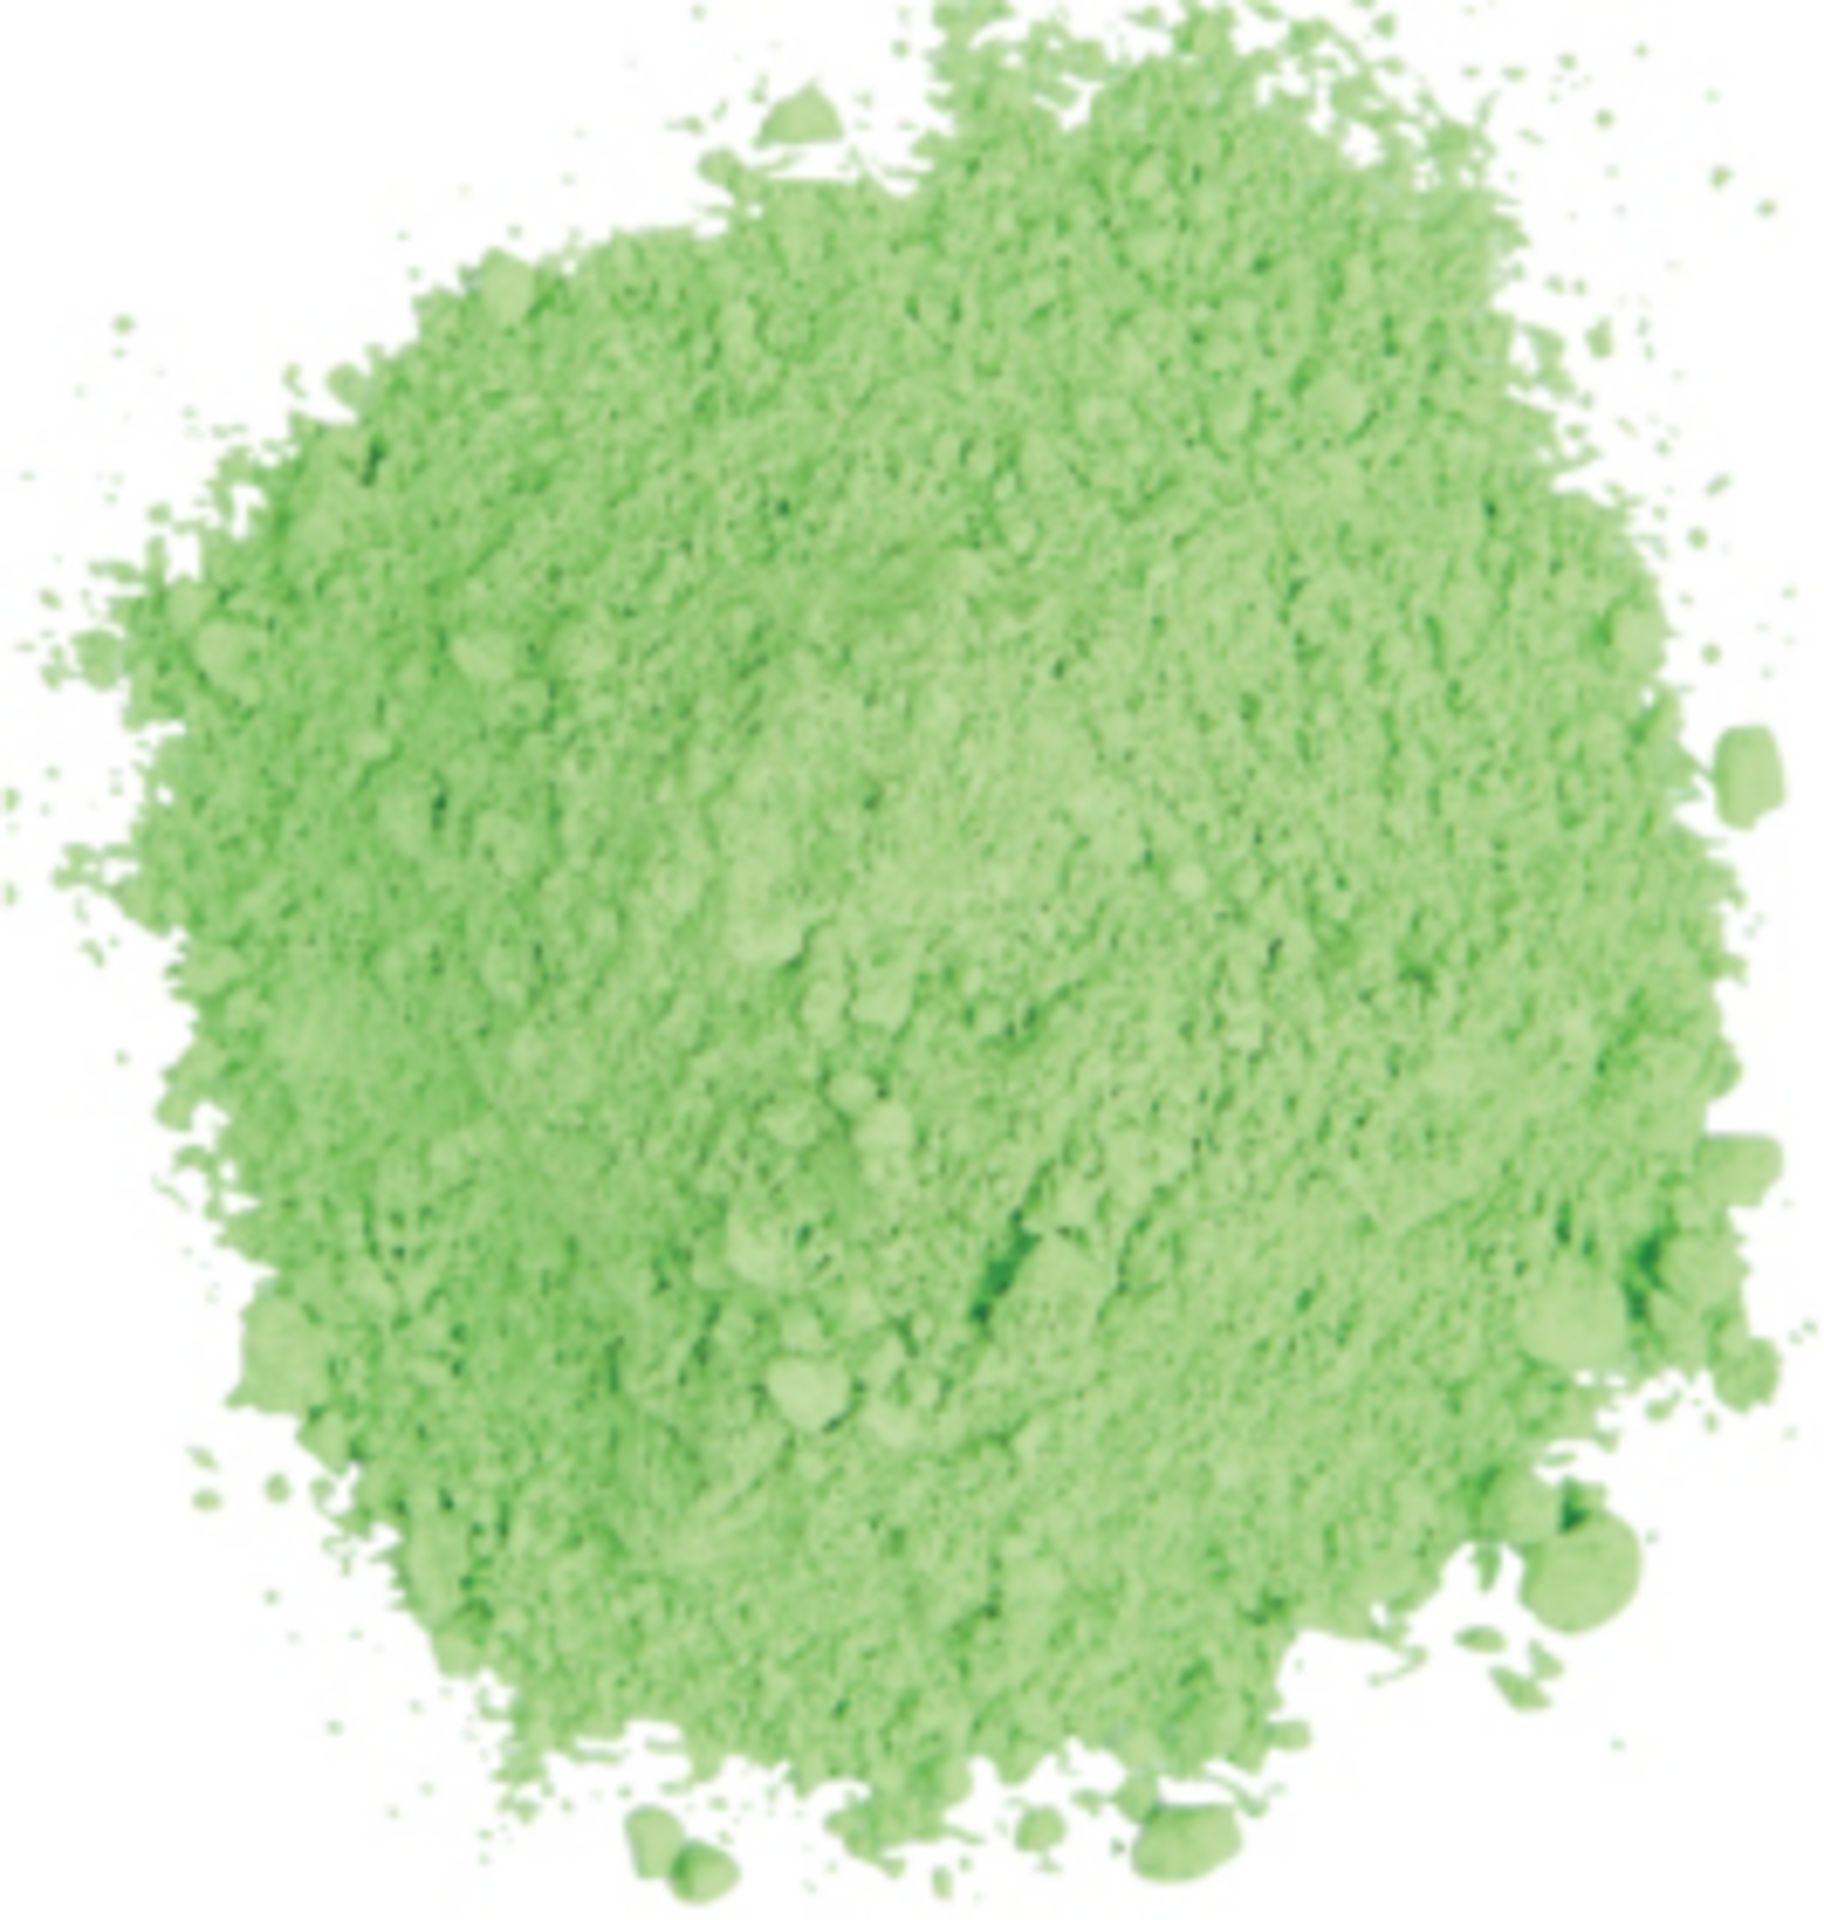 V Grade U 9kg Tub Brian Glegg Powder Paint Green Suitable For Schools Nurseries Etc X 2 Bid price to - Image 2 of 2